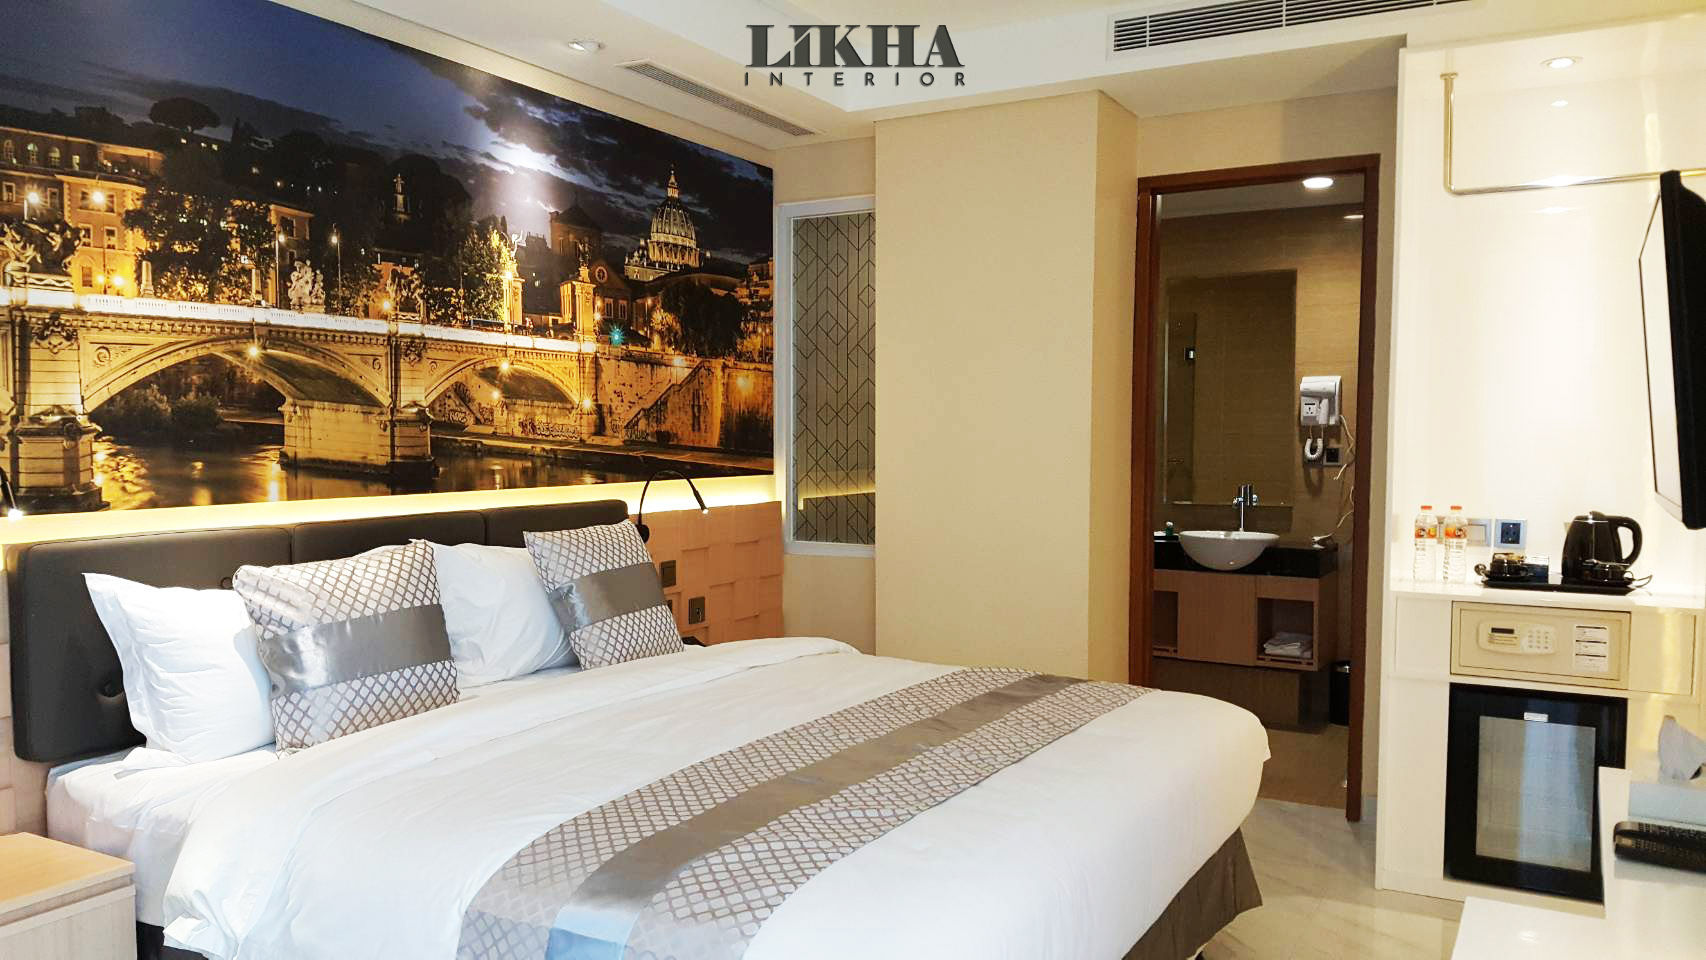 HOTEL ELEGAN DAN NYAMAN di Grand Viveana, Likha Interior Likha Interior Ticari alanlar Kontraplak Oteller